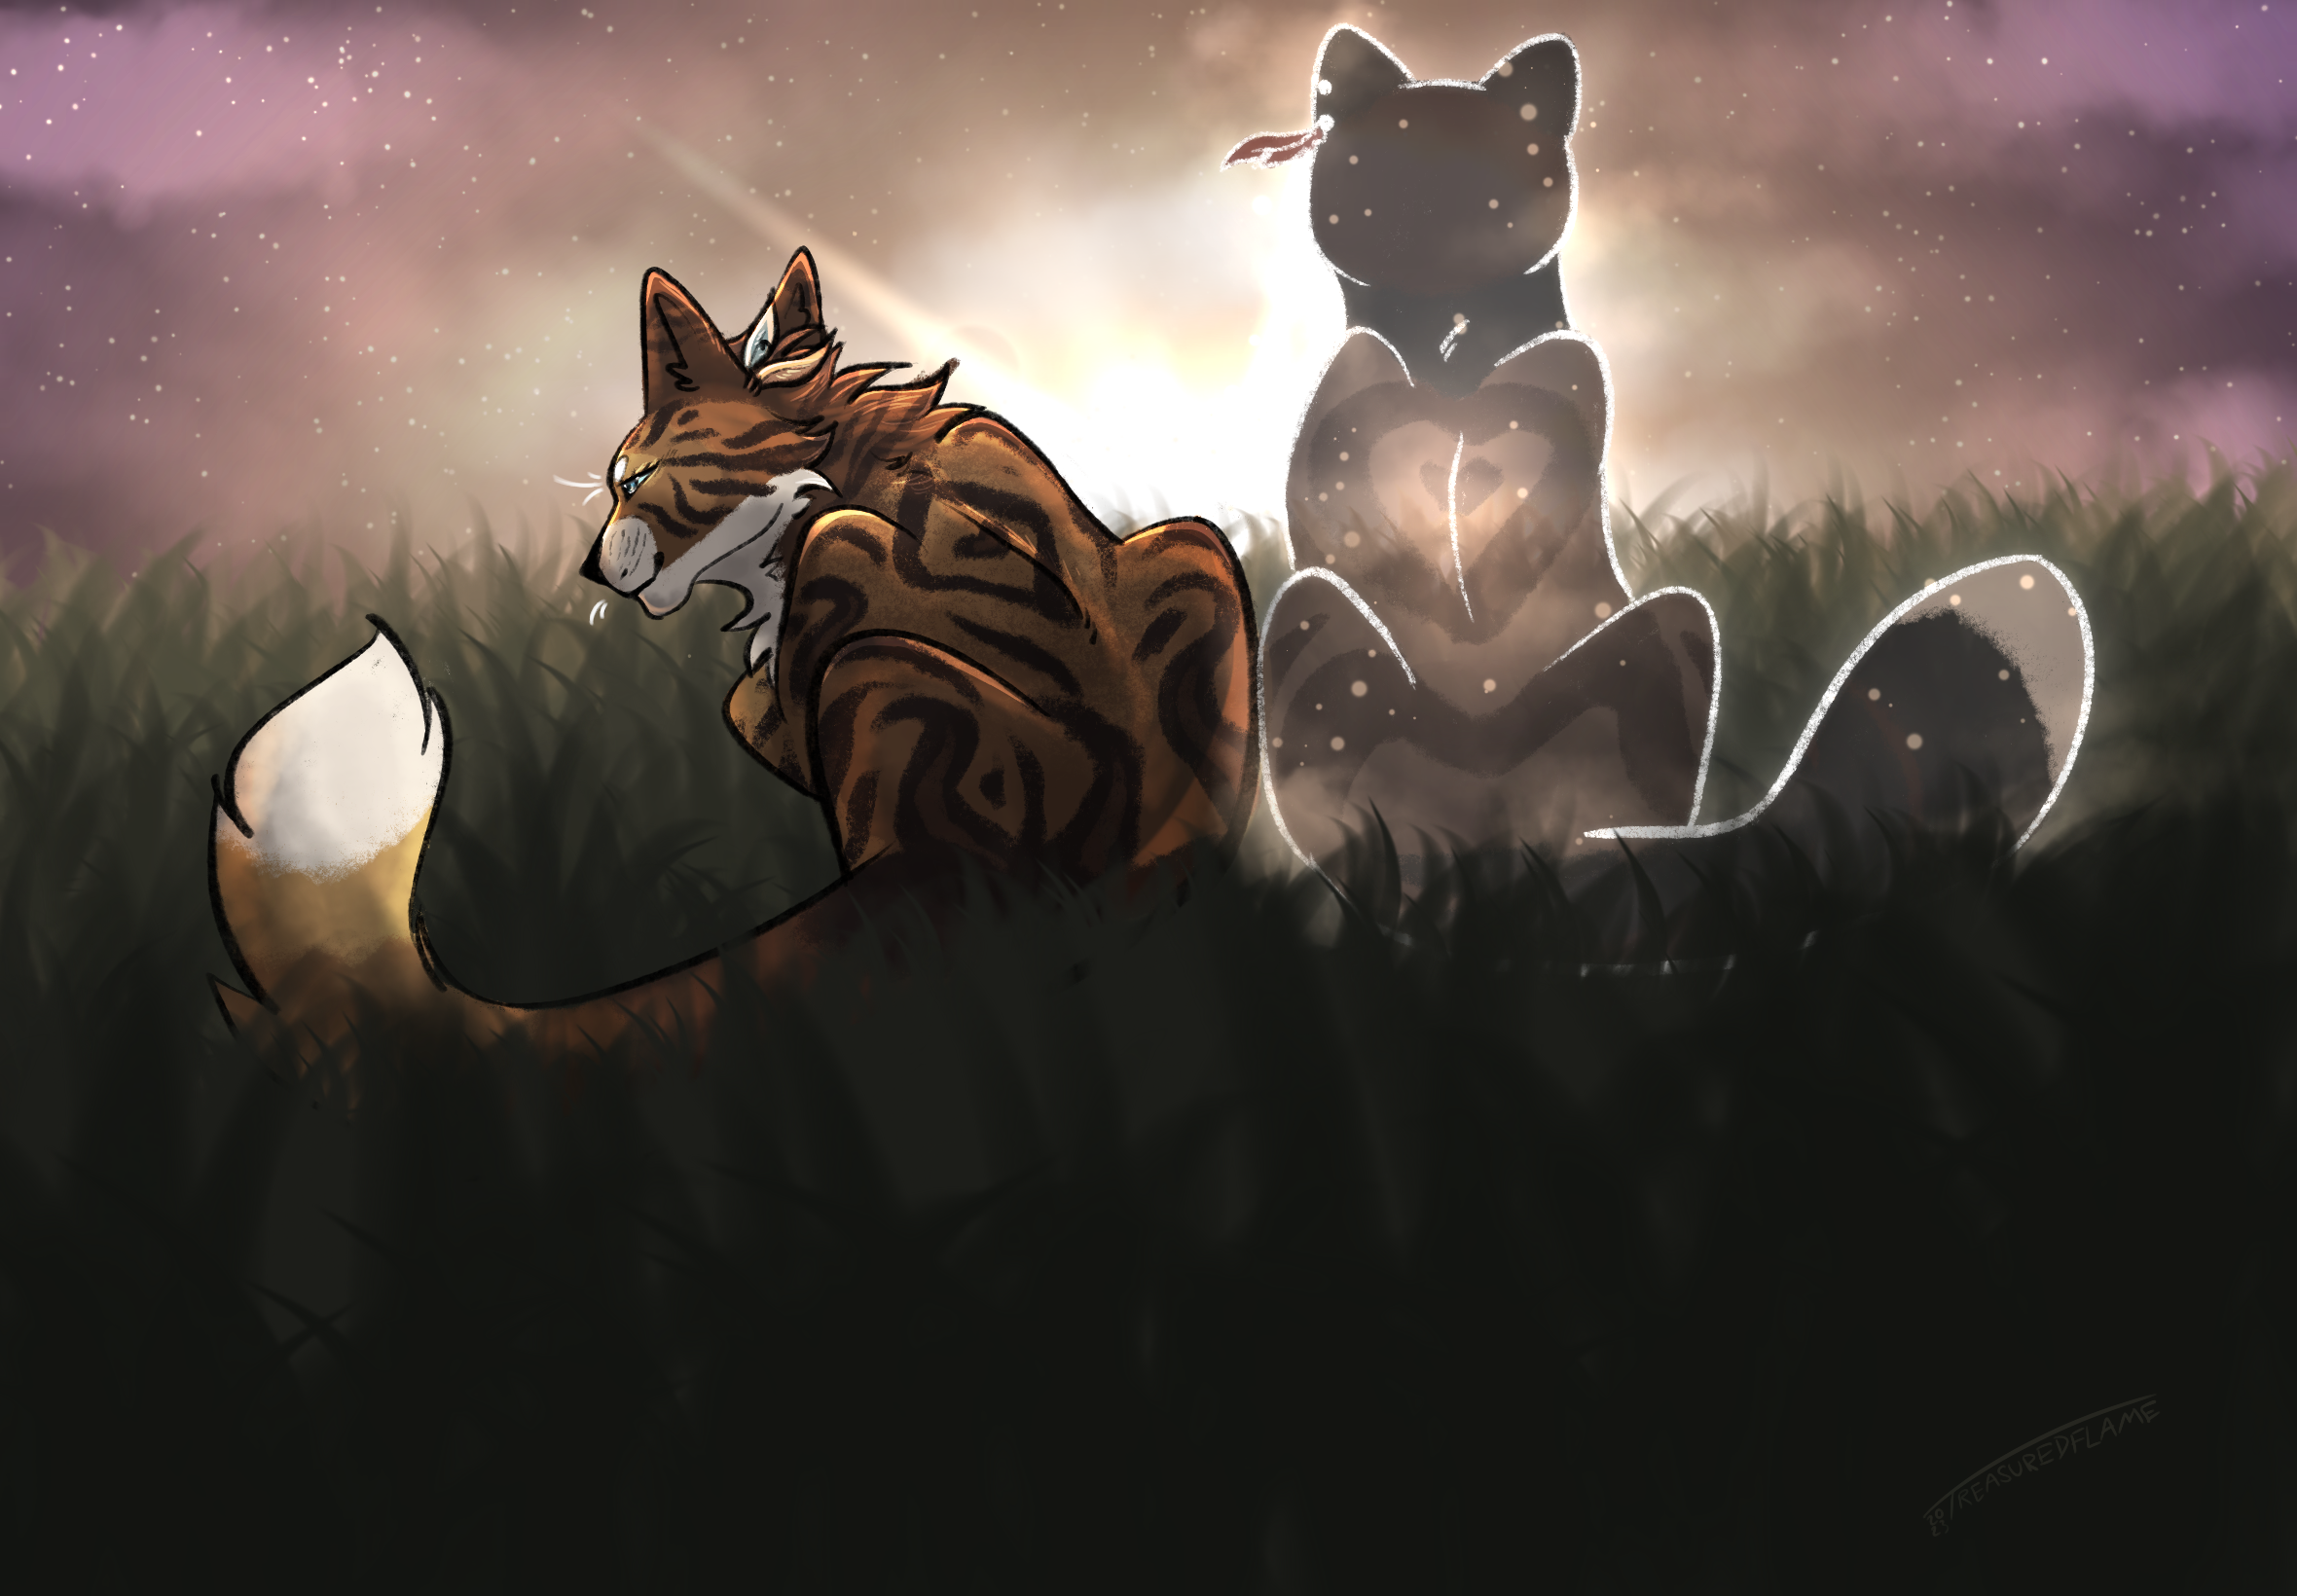 Firestar - Warrior Cats by SnexMy on DeviantArt